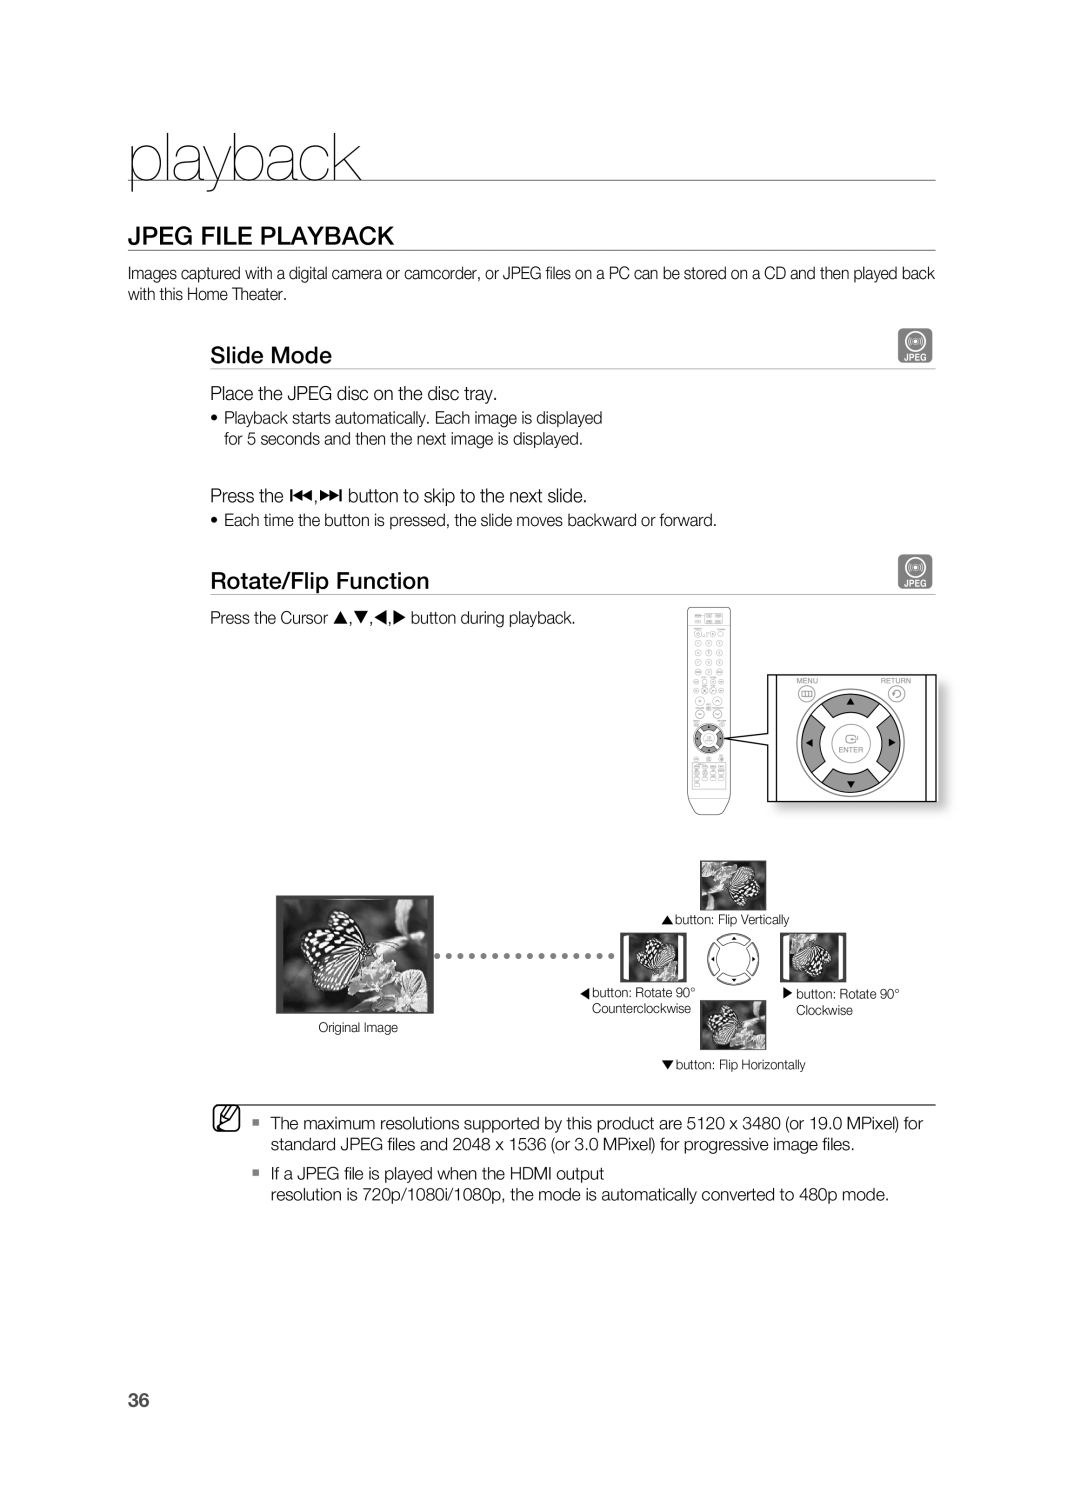 Samsung AH68-02055S manual JPEG fiLE PLayBaCK, Slide mode, rotate/flip function, playback 